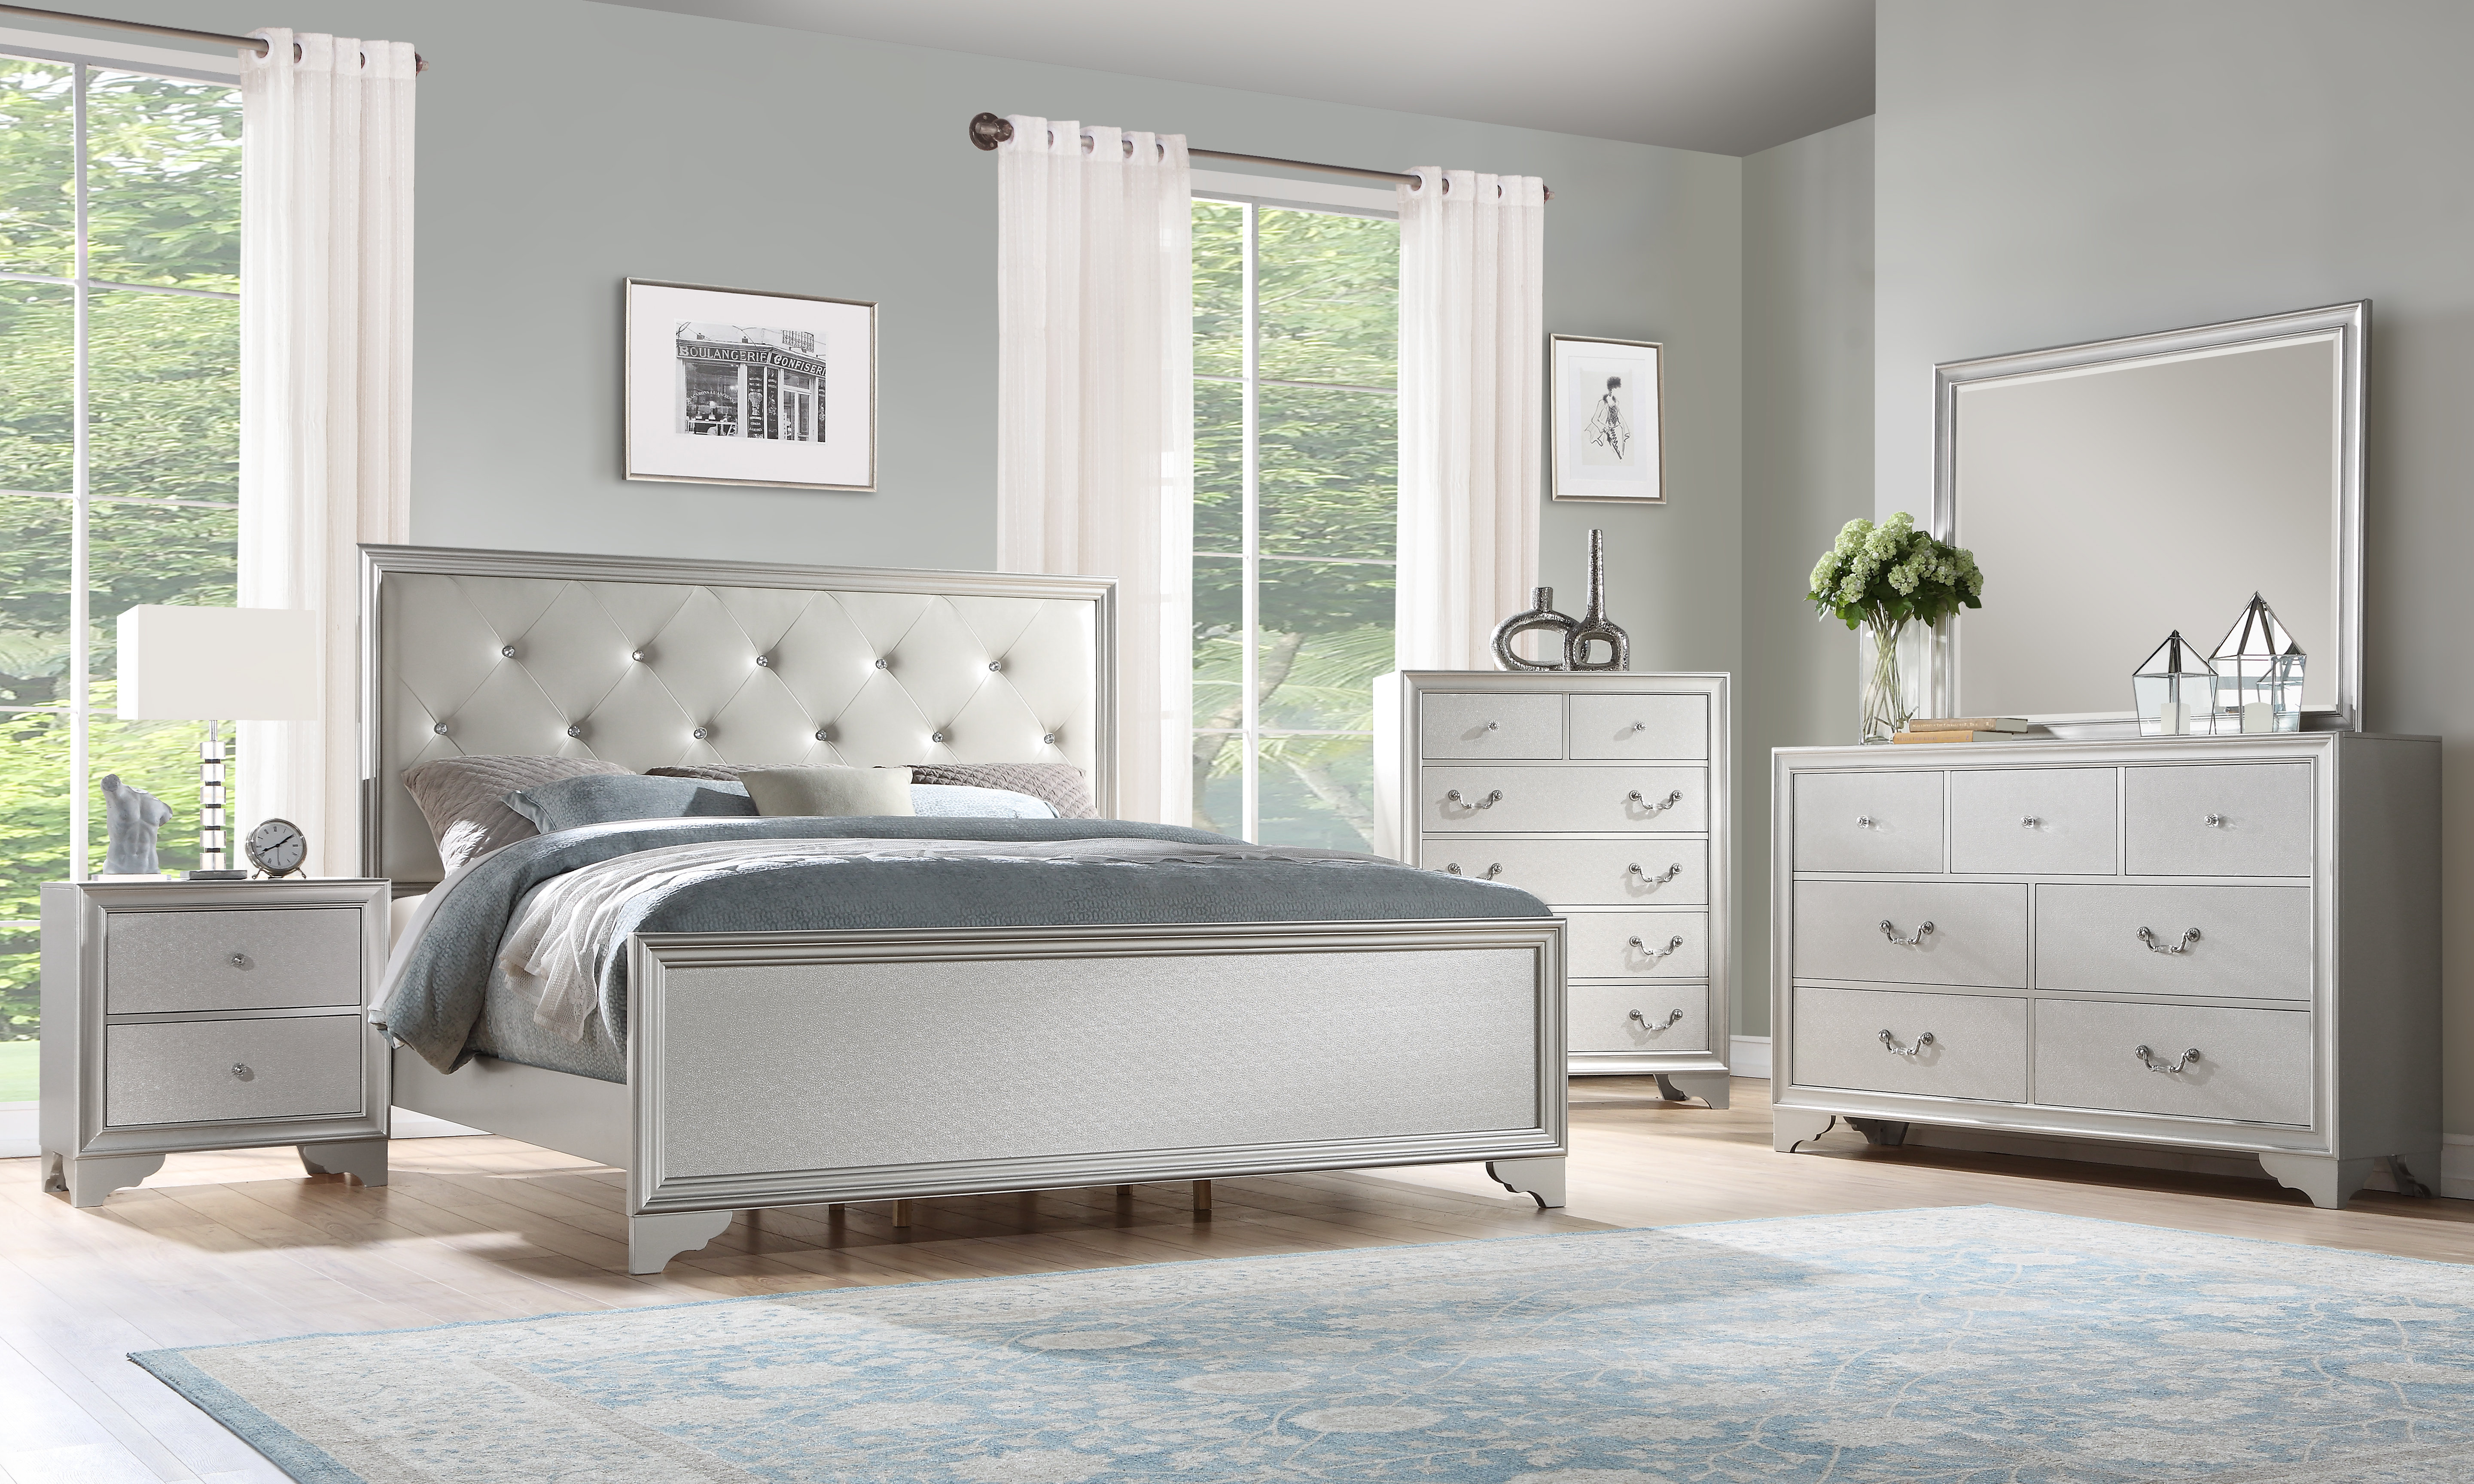 Xan Standard 4 Piece Bedroom Set pertaining to sizing 5760 X 3456